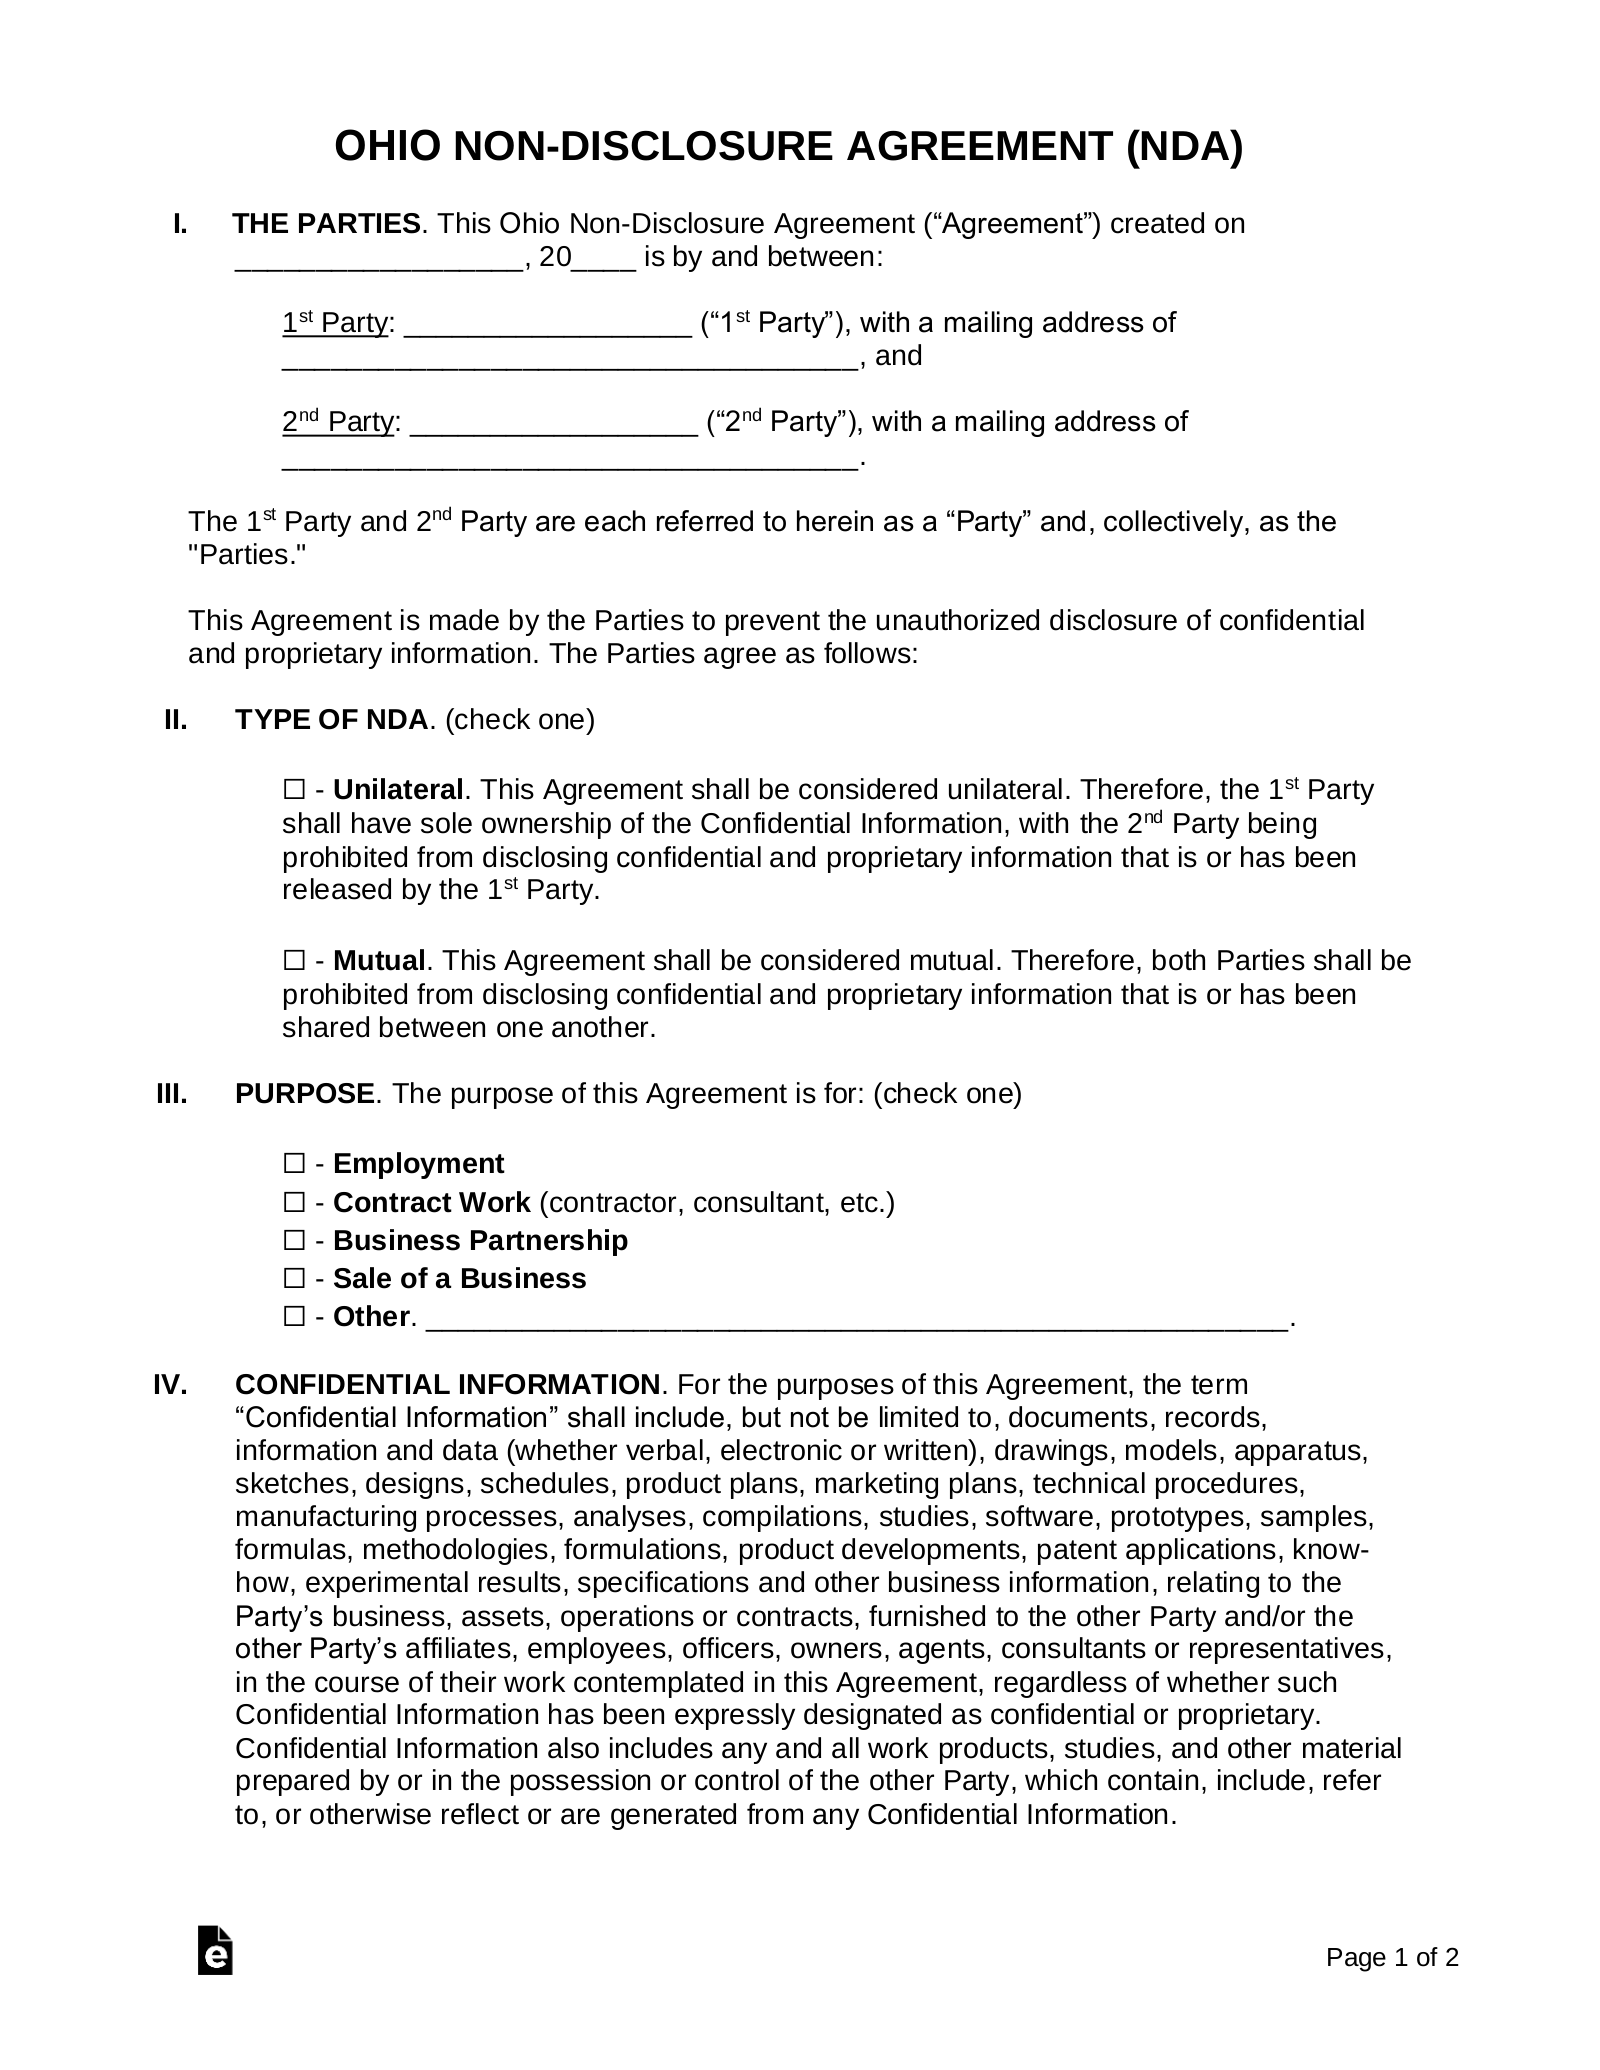 Ohio Non-Disclosure Agreement (NDA) Template